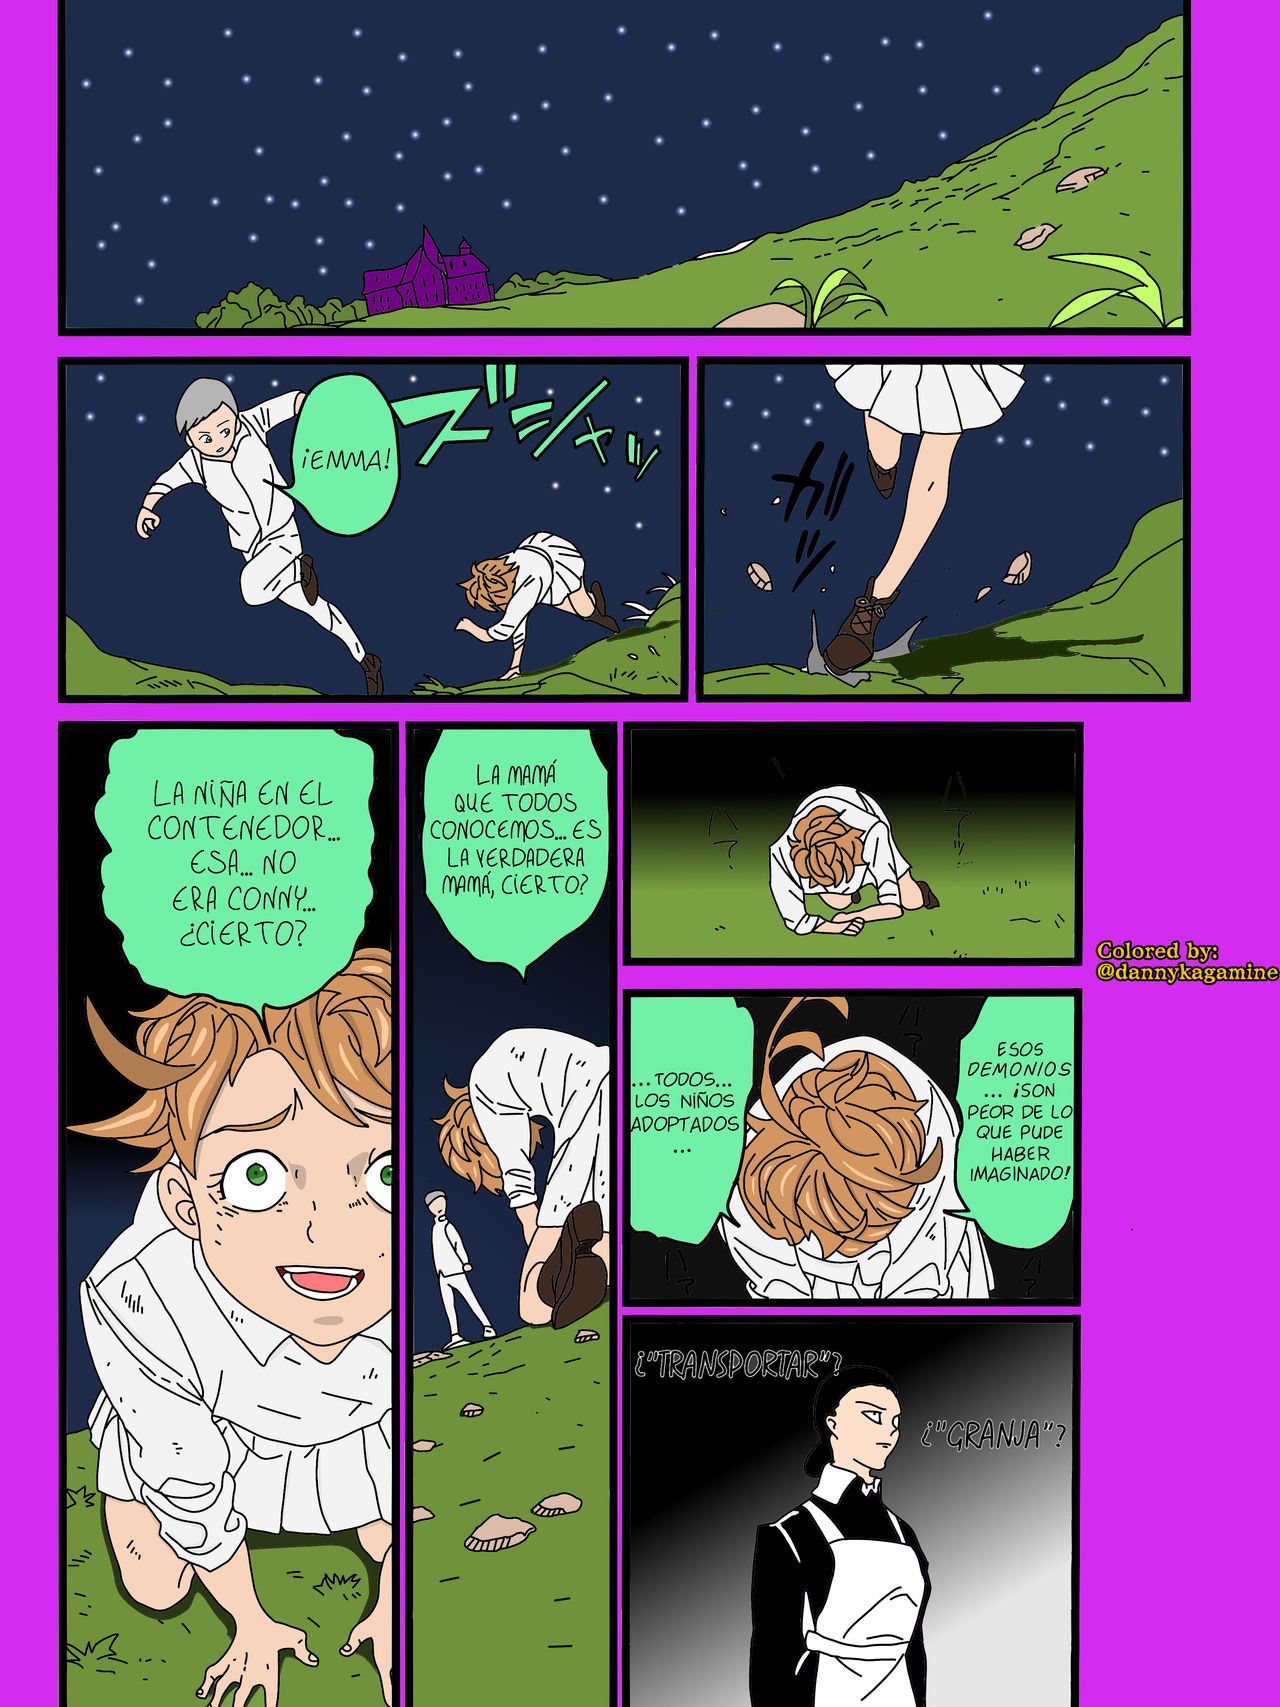 The Promised Neverland Emma Manga Colors Anime by Amanomoon on DeviantArt